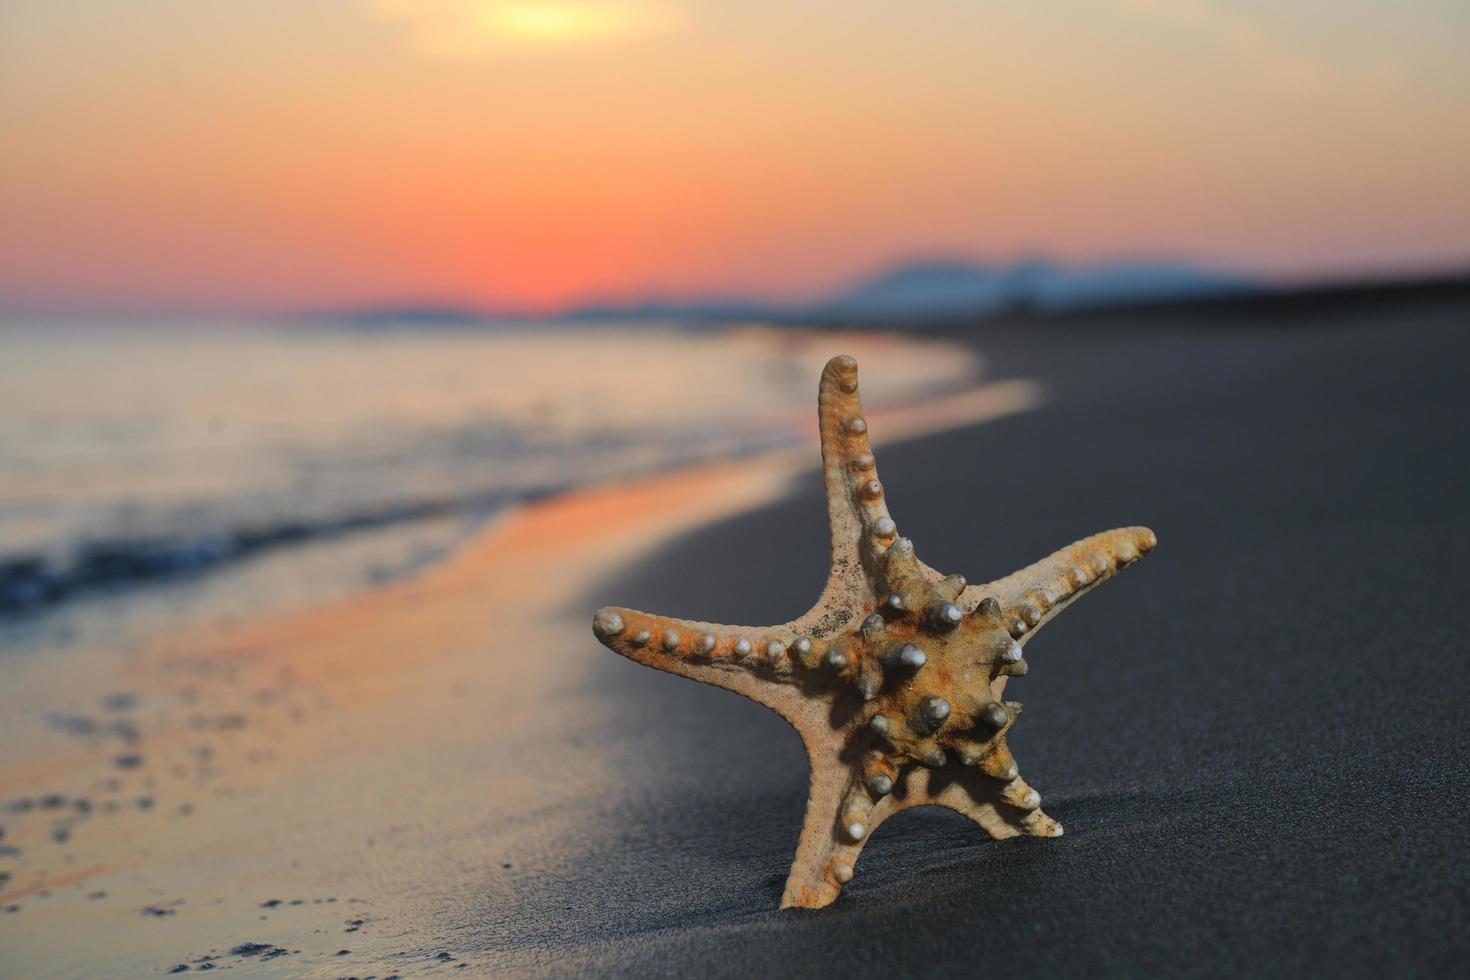 zomer strand zonsondergang met ster Aan strand foto